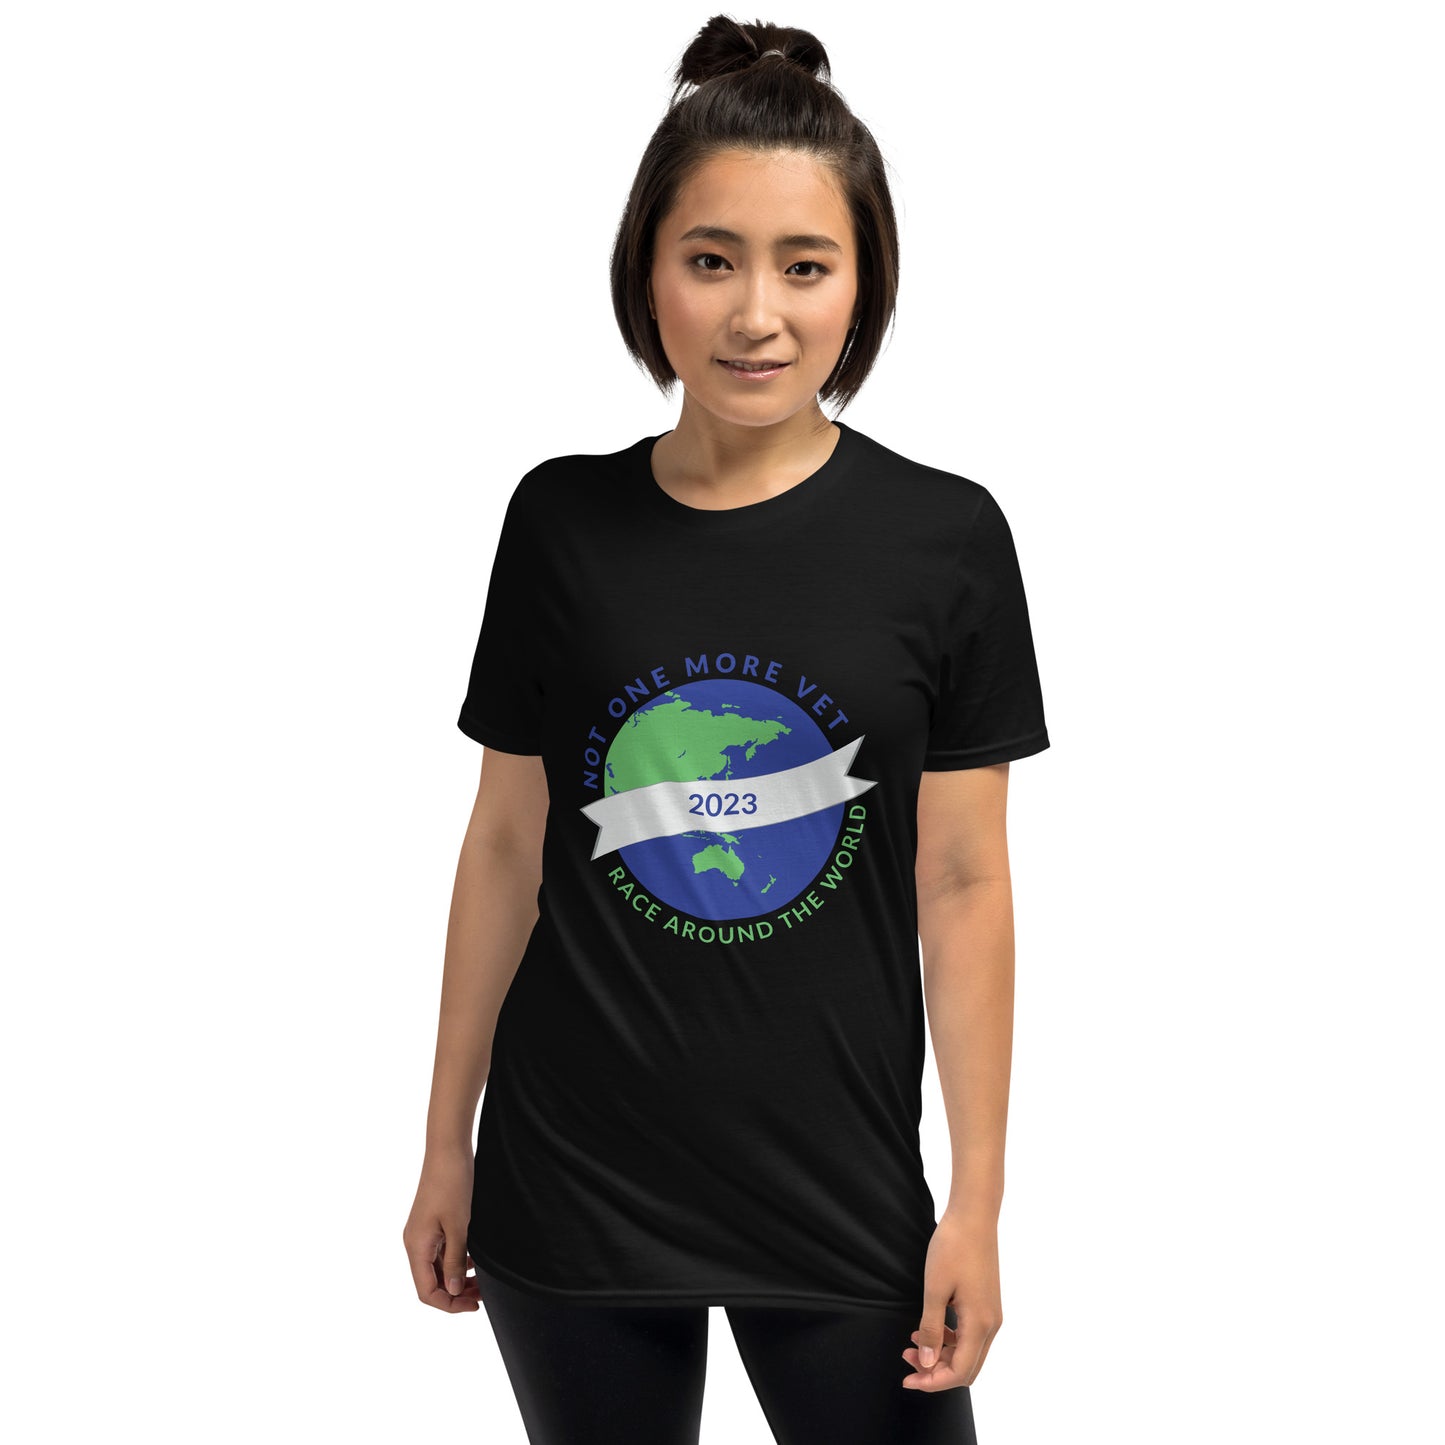 RATW23 - Europe, Asia, & Oceania Gildan Participant T-Shirt